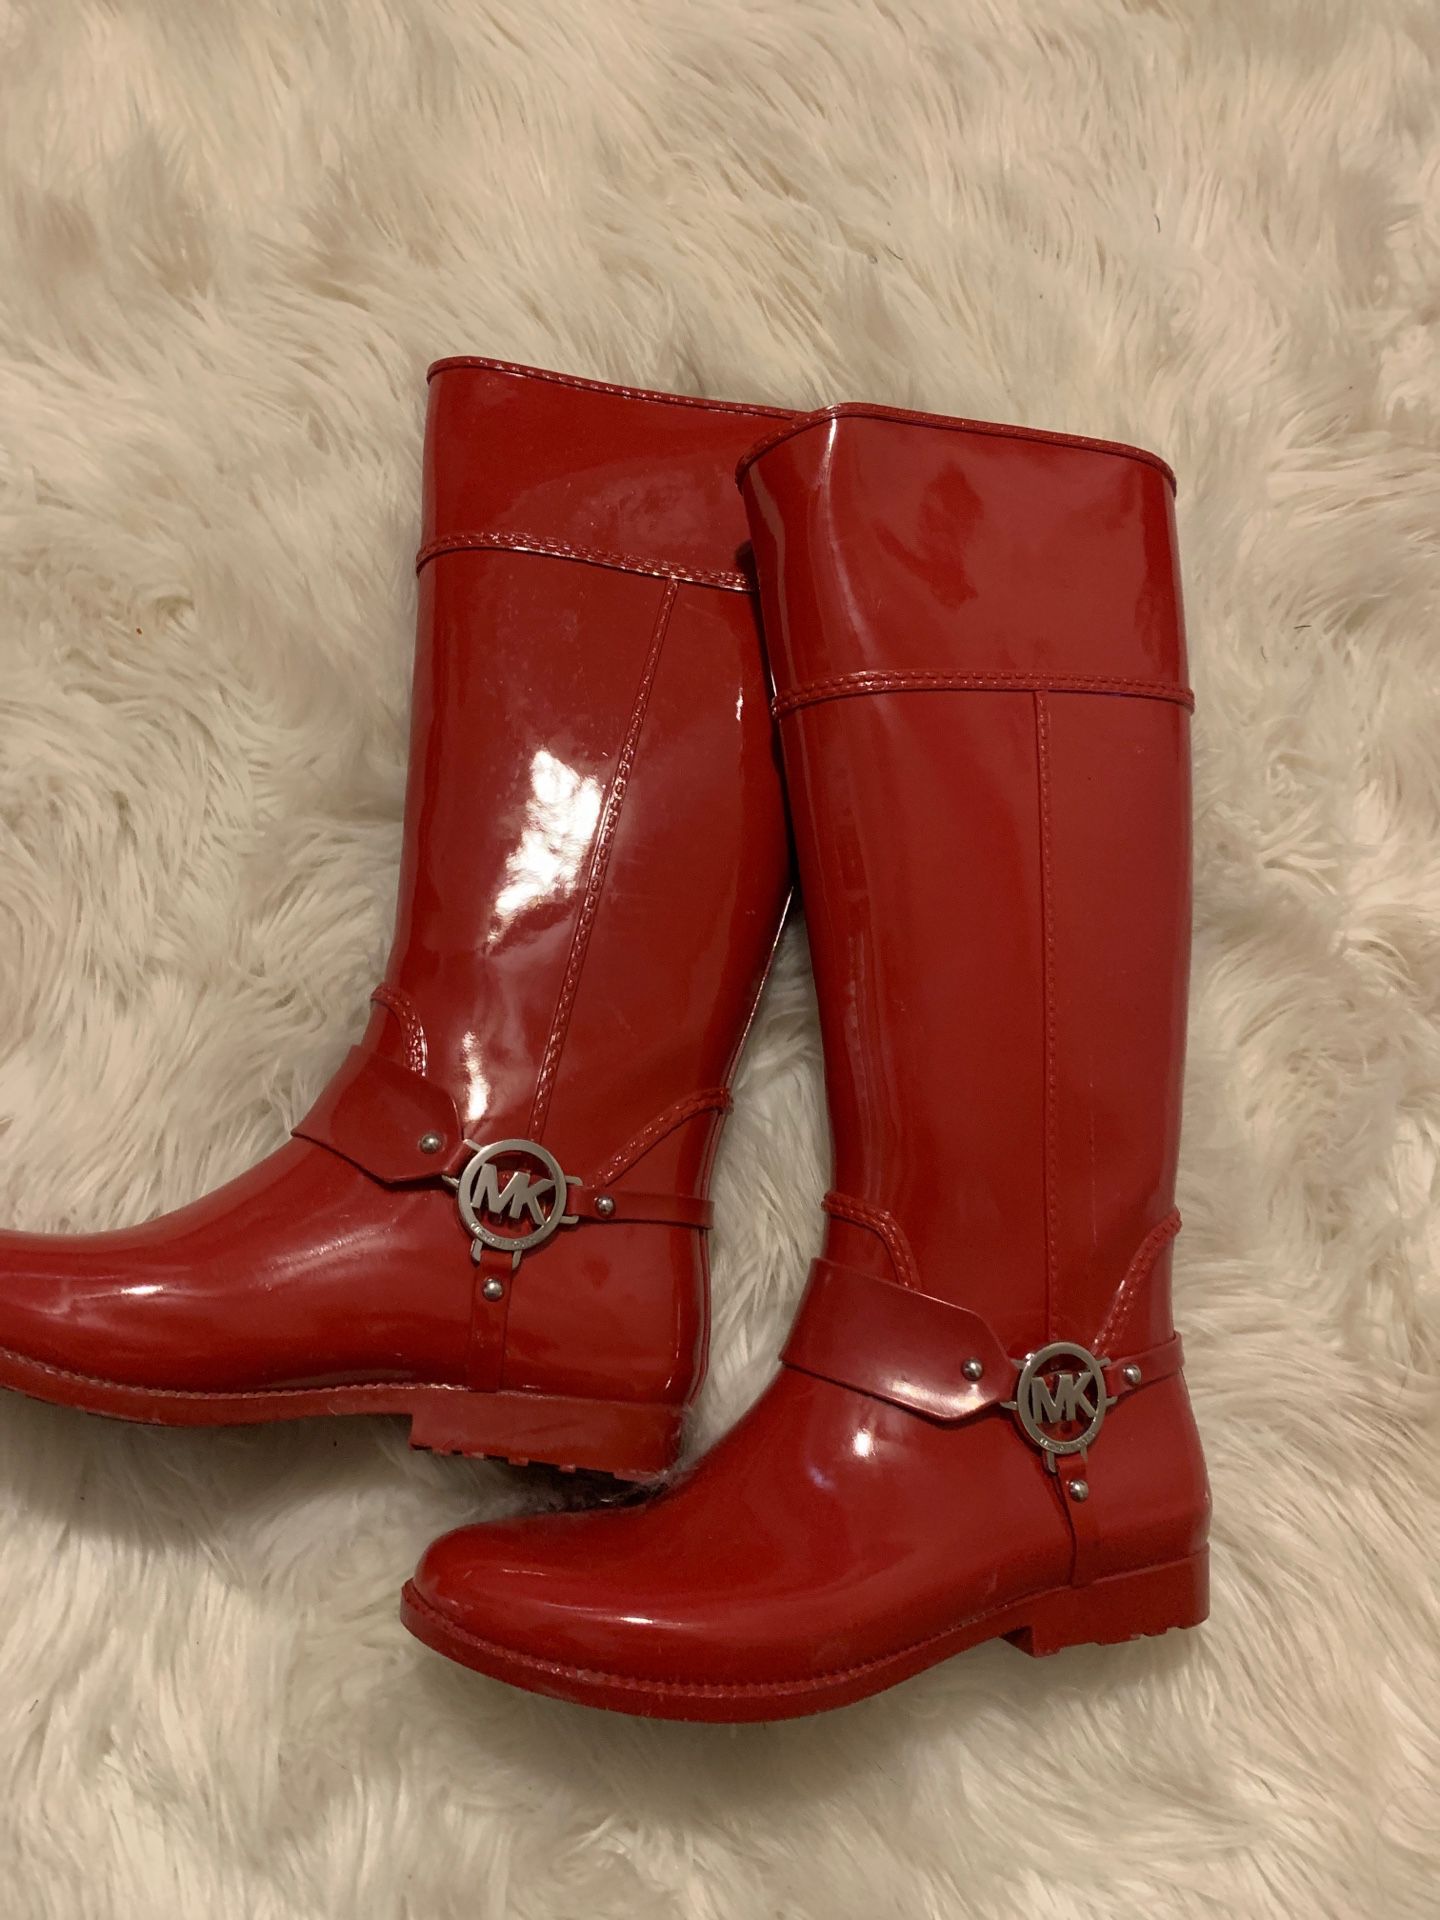 Woman’s size 10 Michael kors rain boots